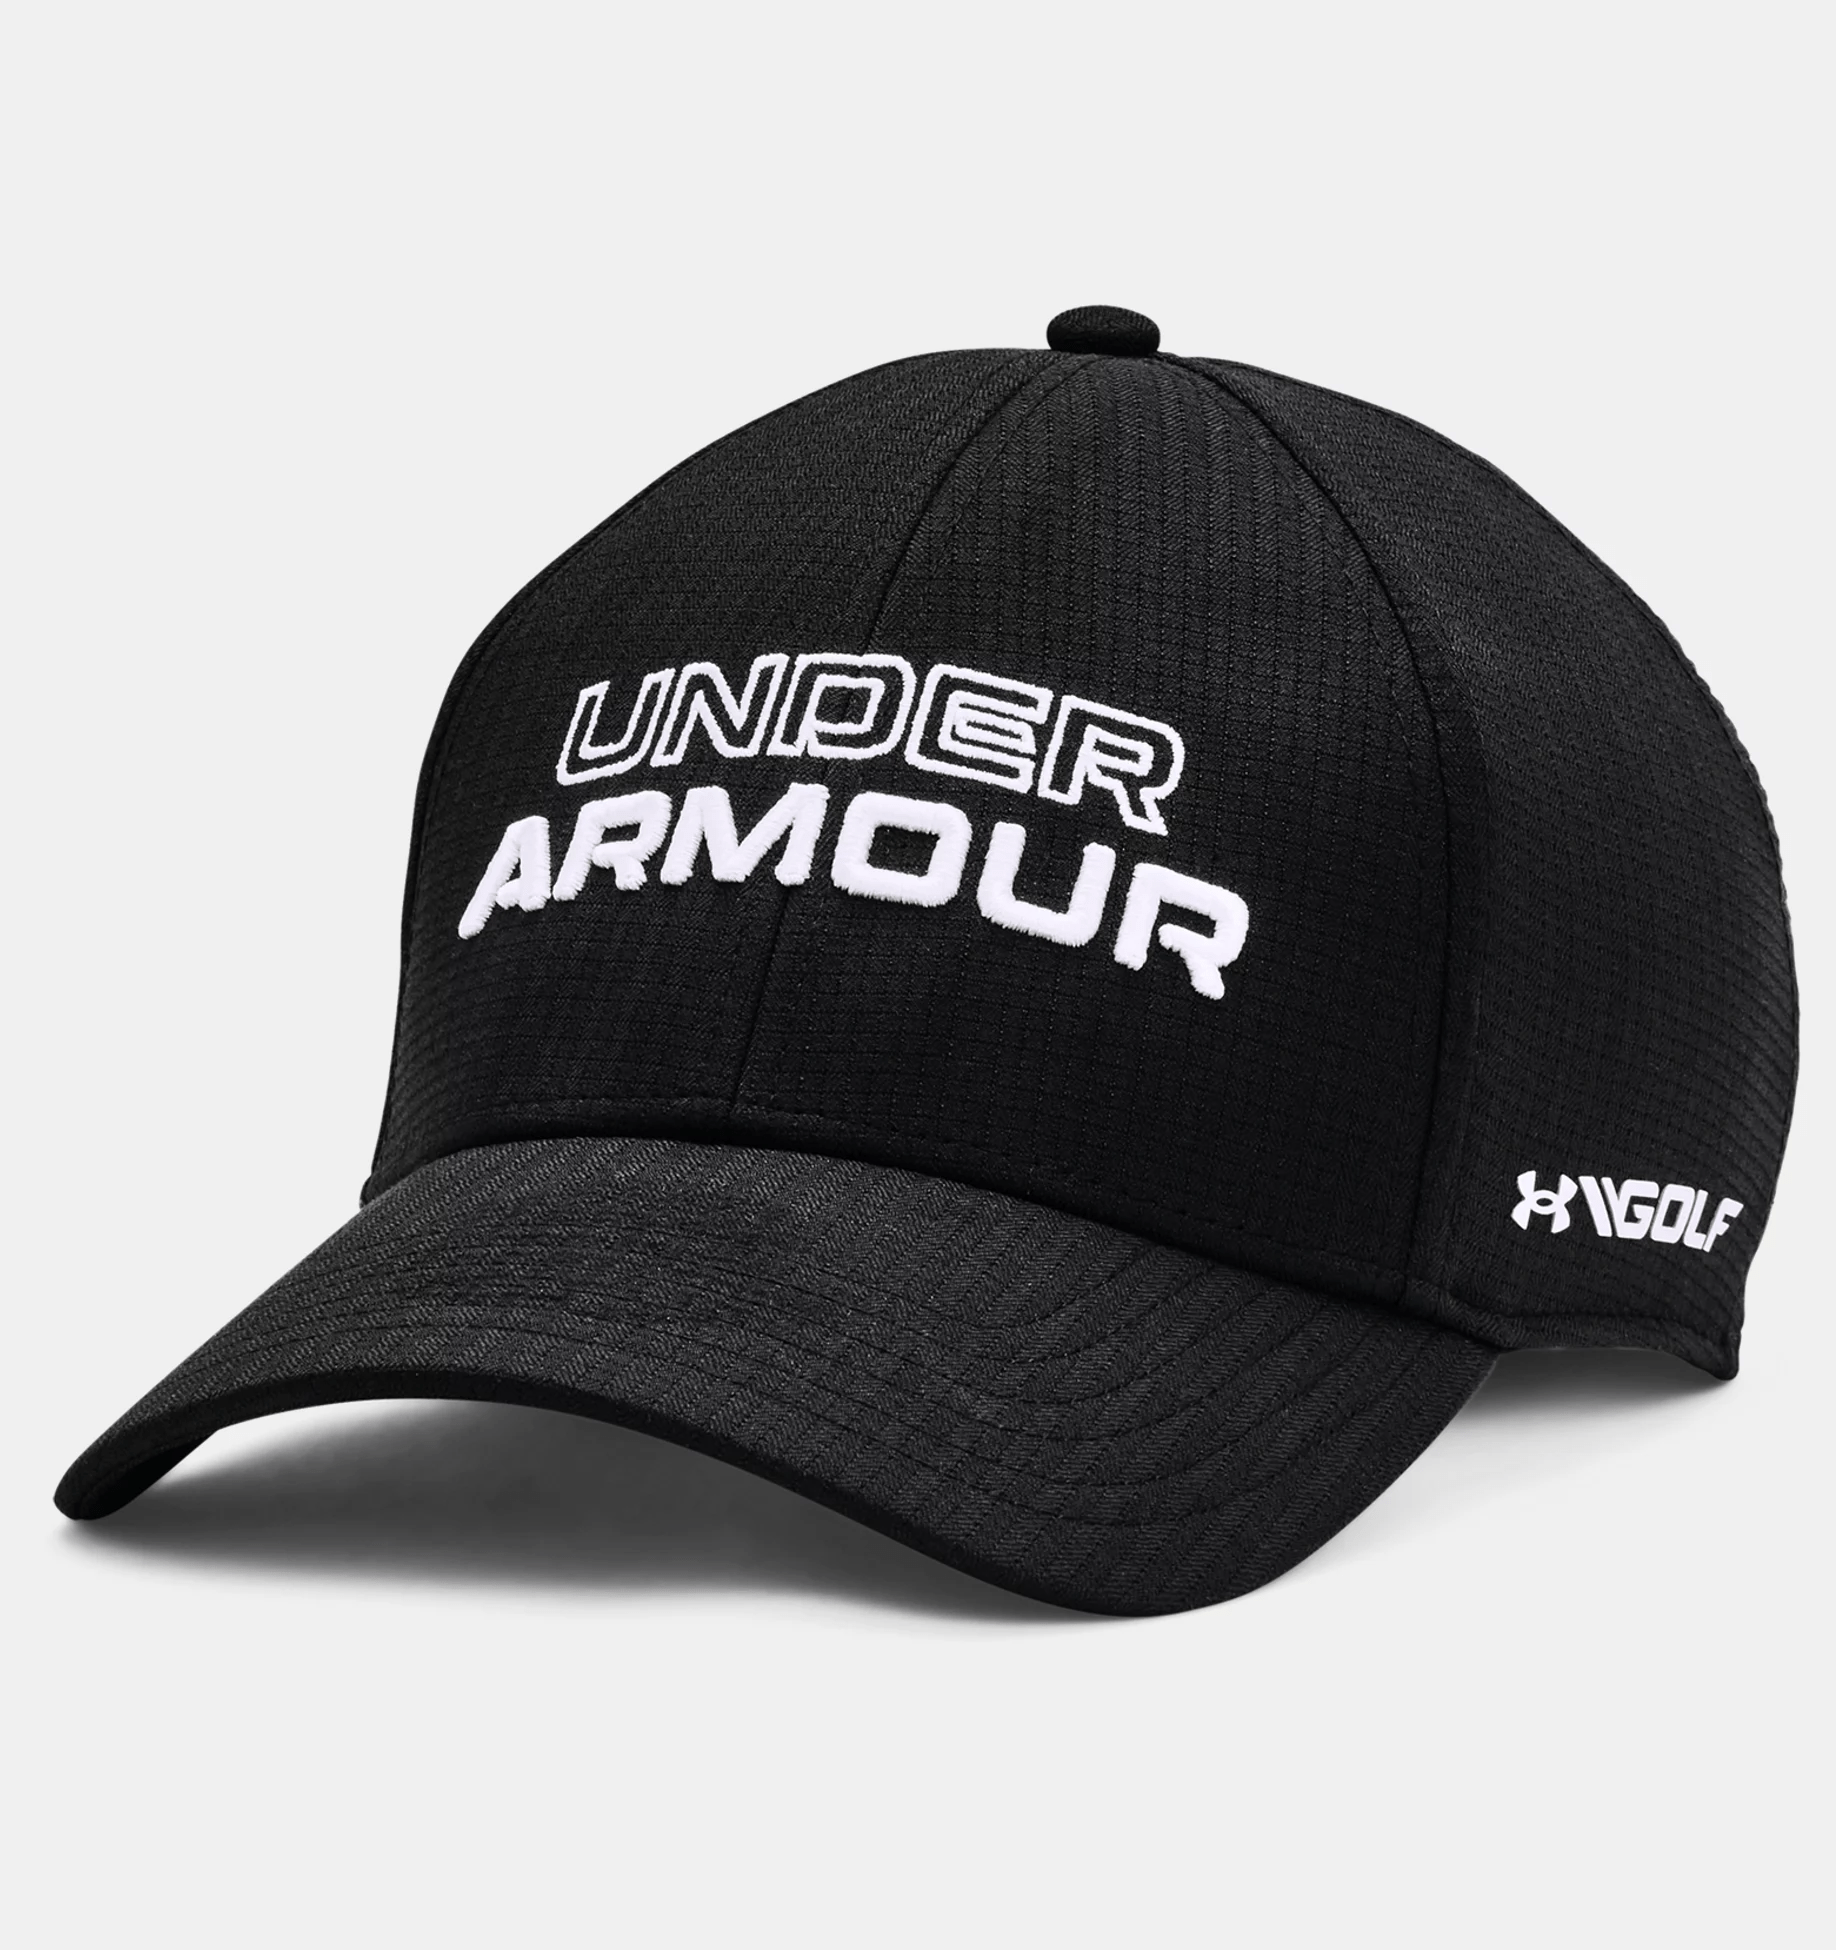 Under Armour Men's Jordan Spieth Golf Hat - Black, L/Xl